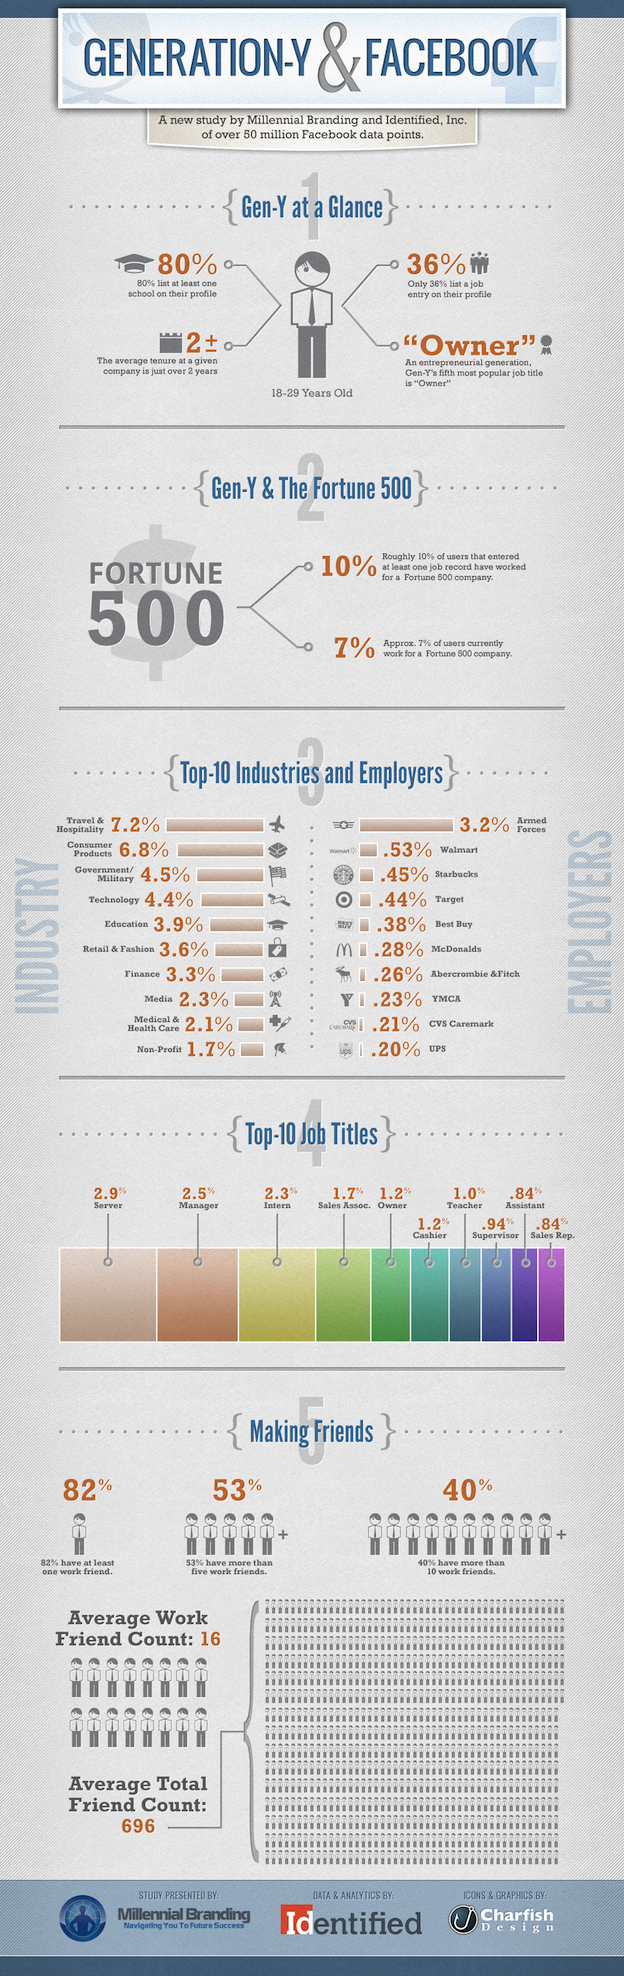 Blog generation-y-facebook-infographic